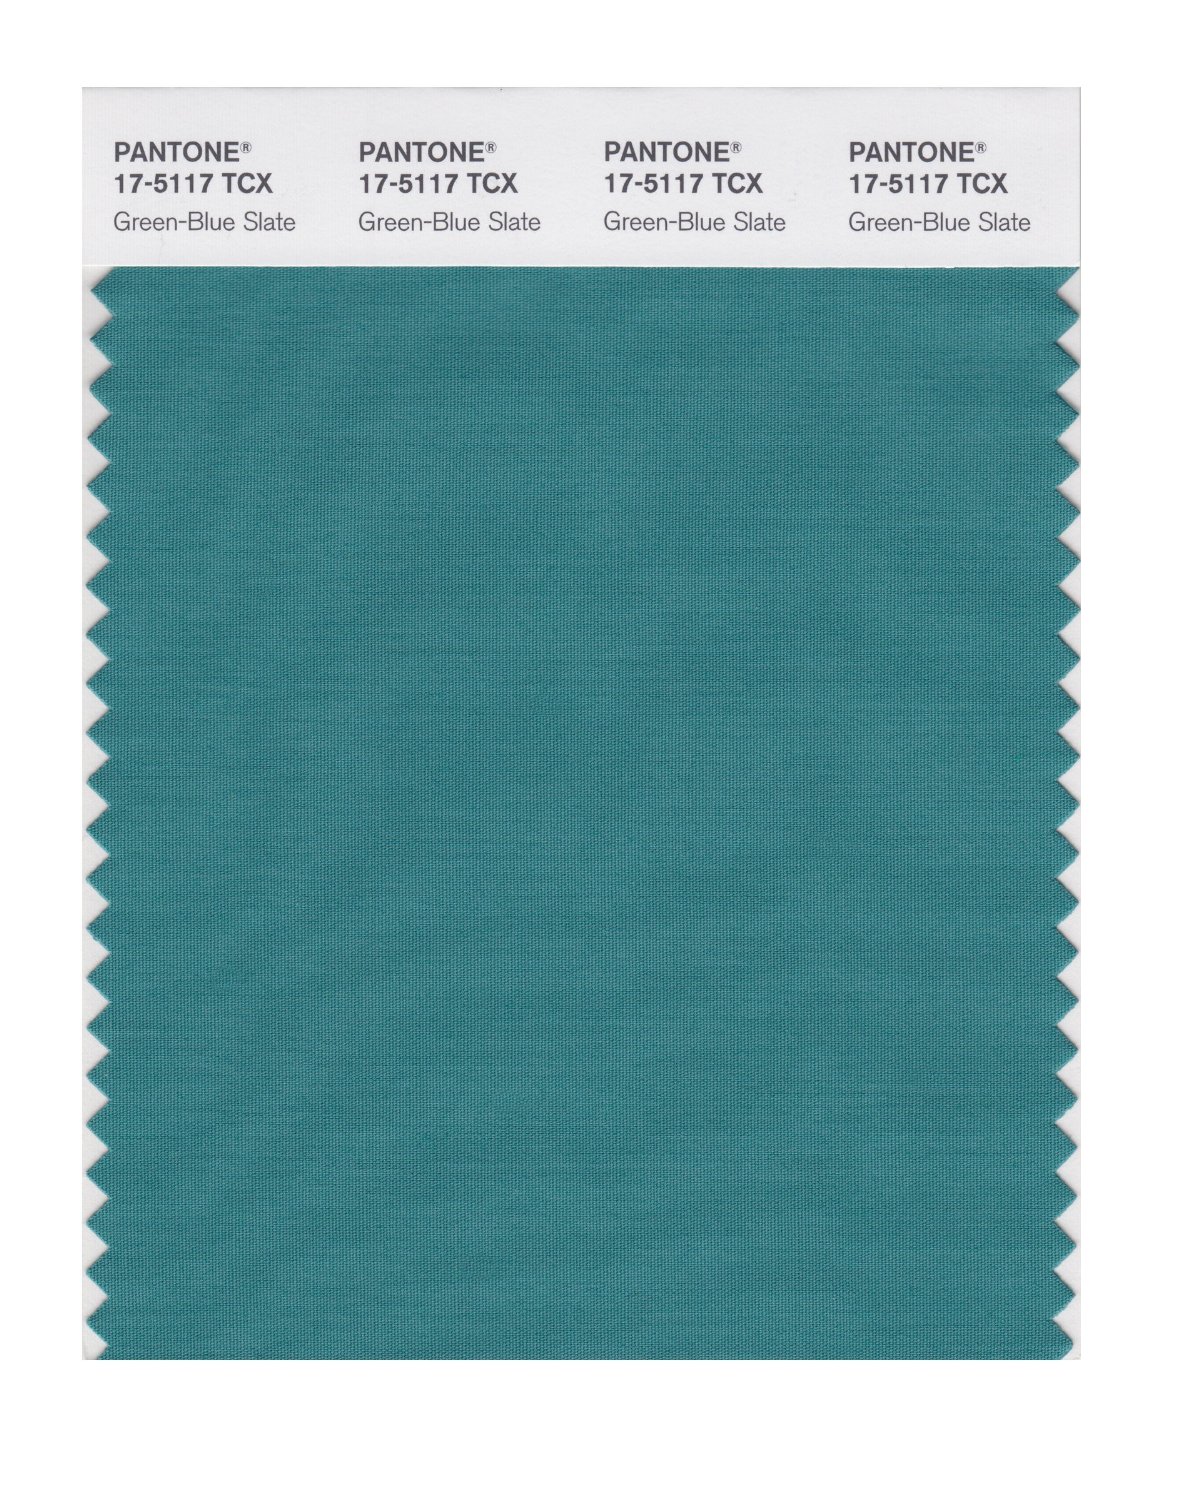 Pantone Cotton Swatch 17-5117 Green-Blue Slat